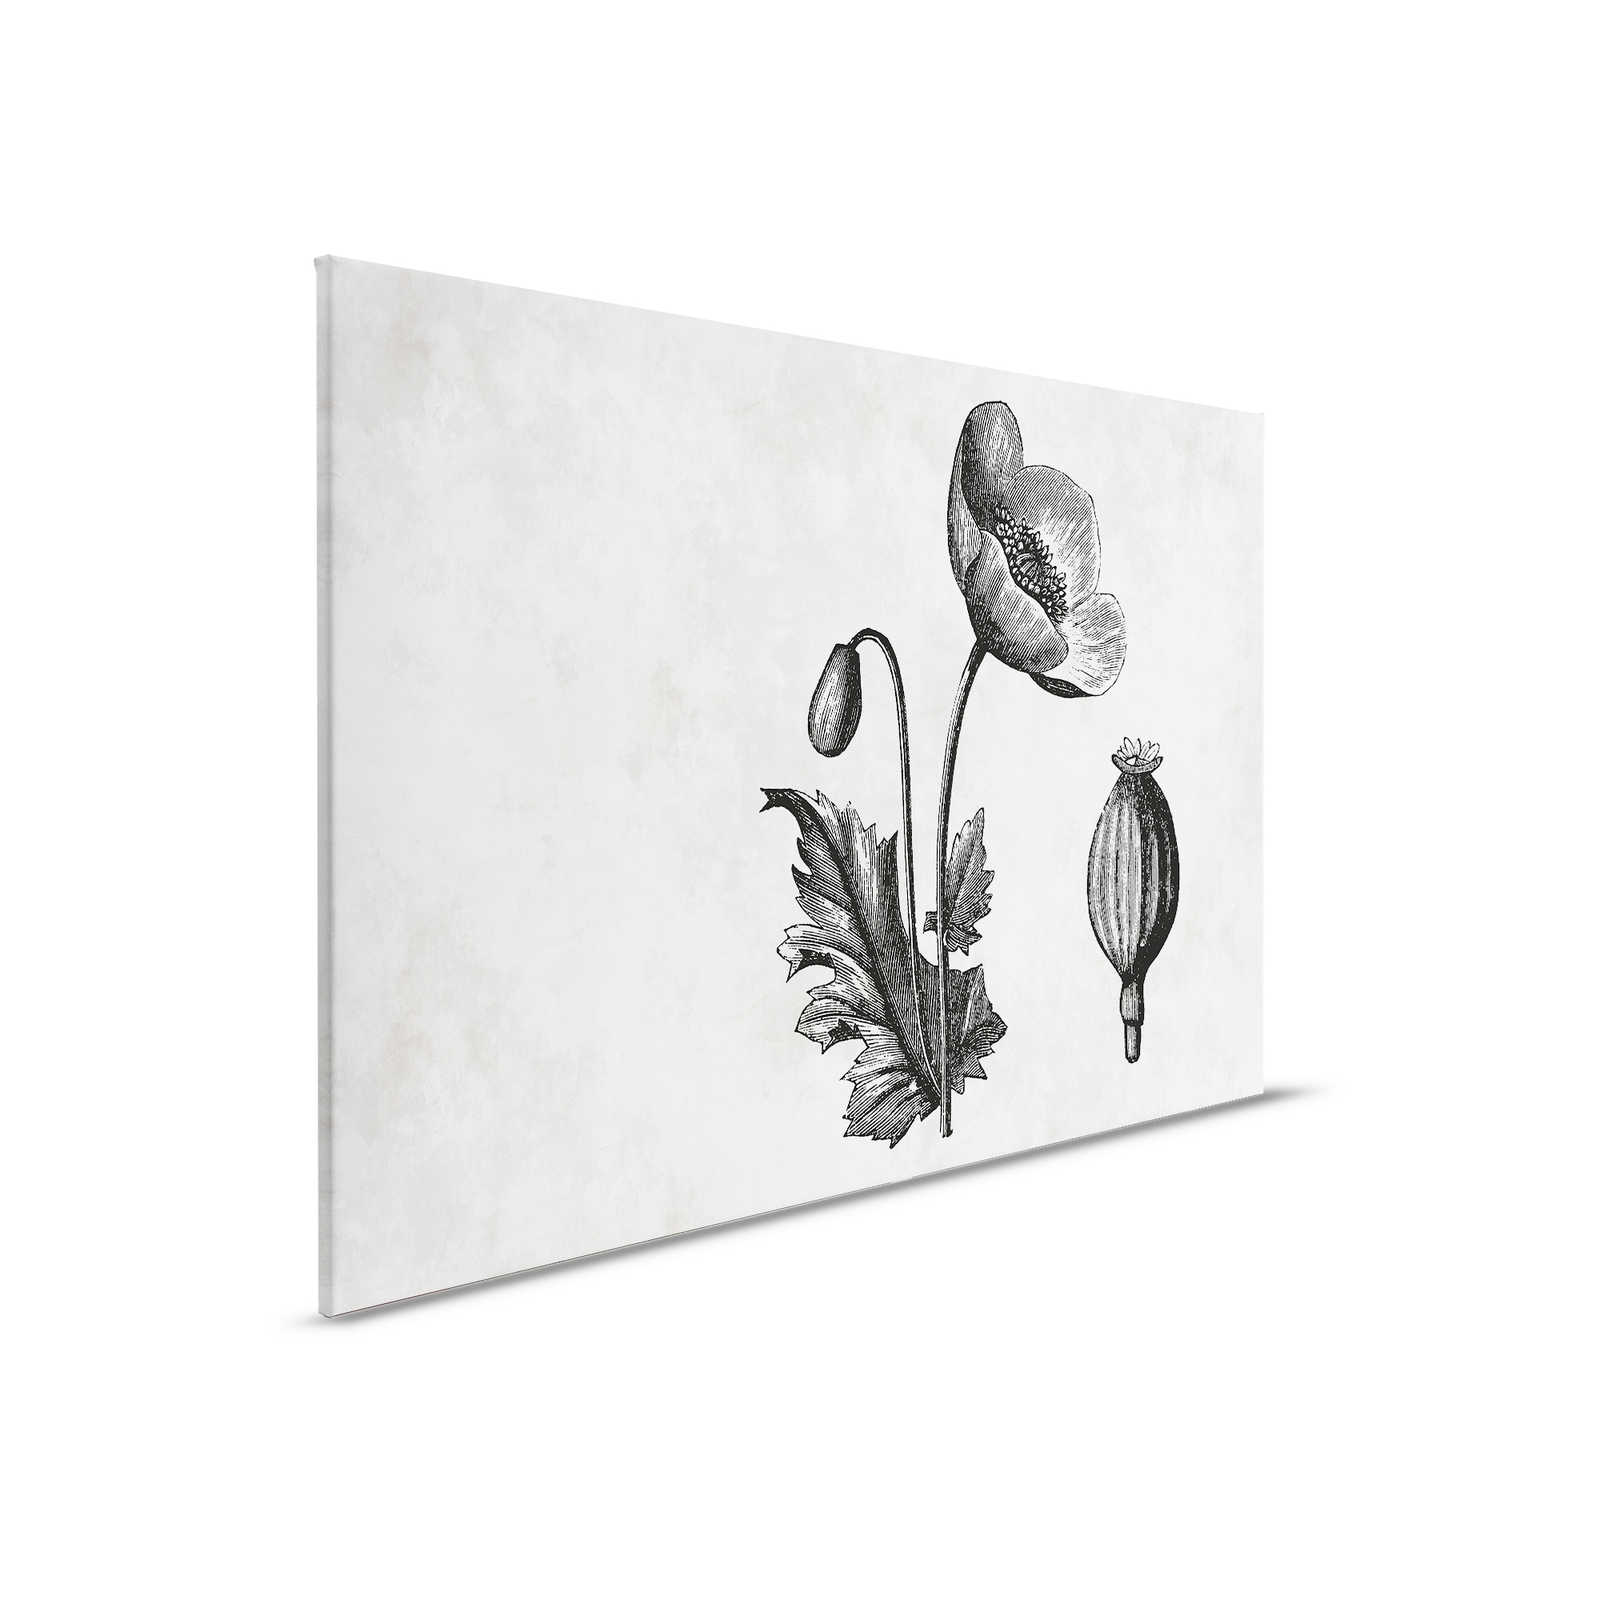         Black and White Canvas Poppy Botanical Style - 0.90 m x 0.60 m
    